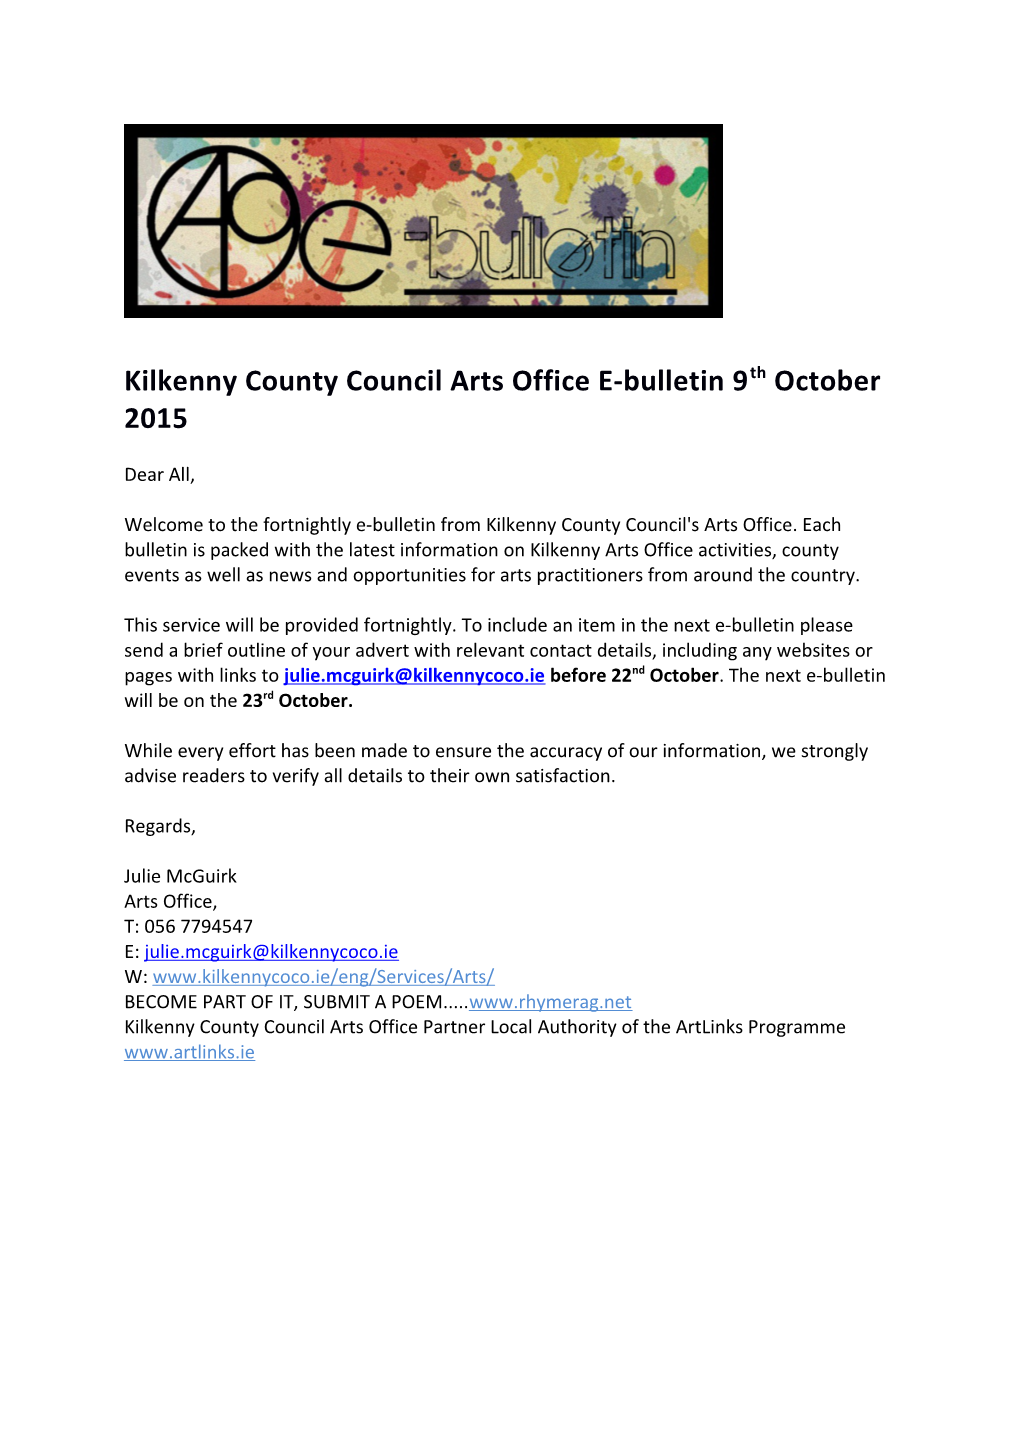 Kilkenny County Council Arts Office E-Bulletin 9Th October 2015